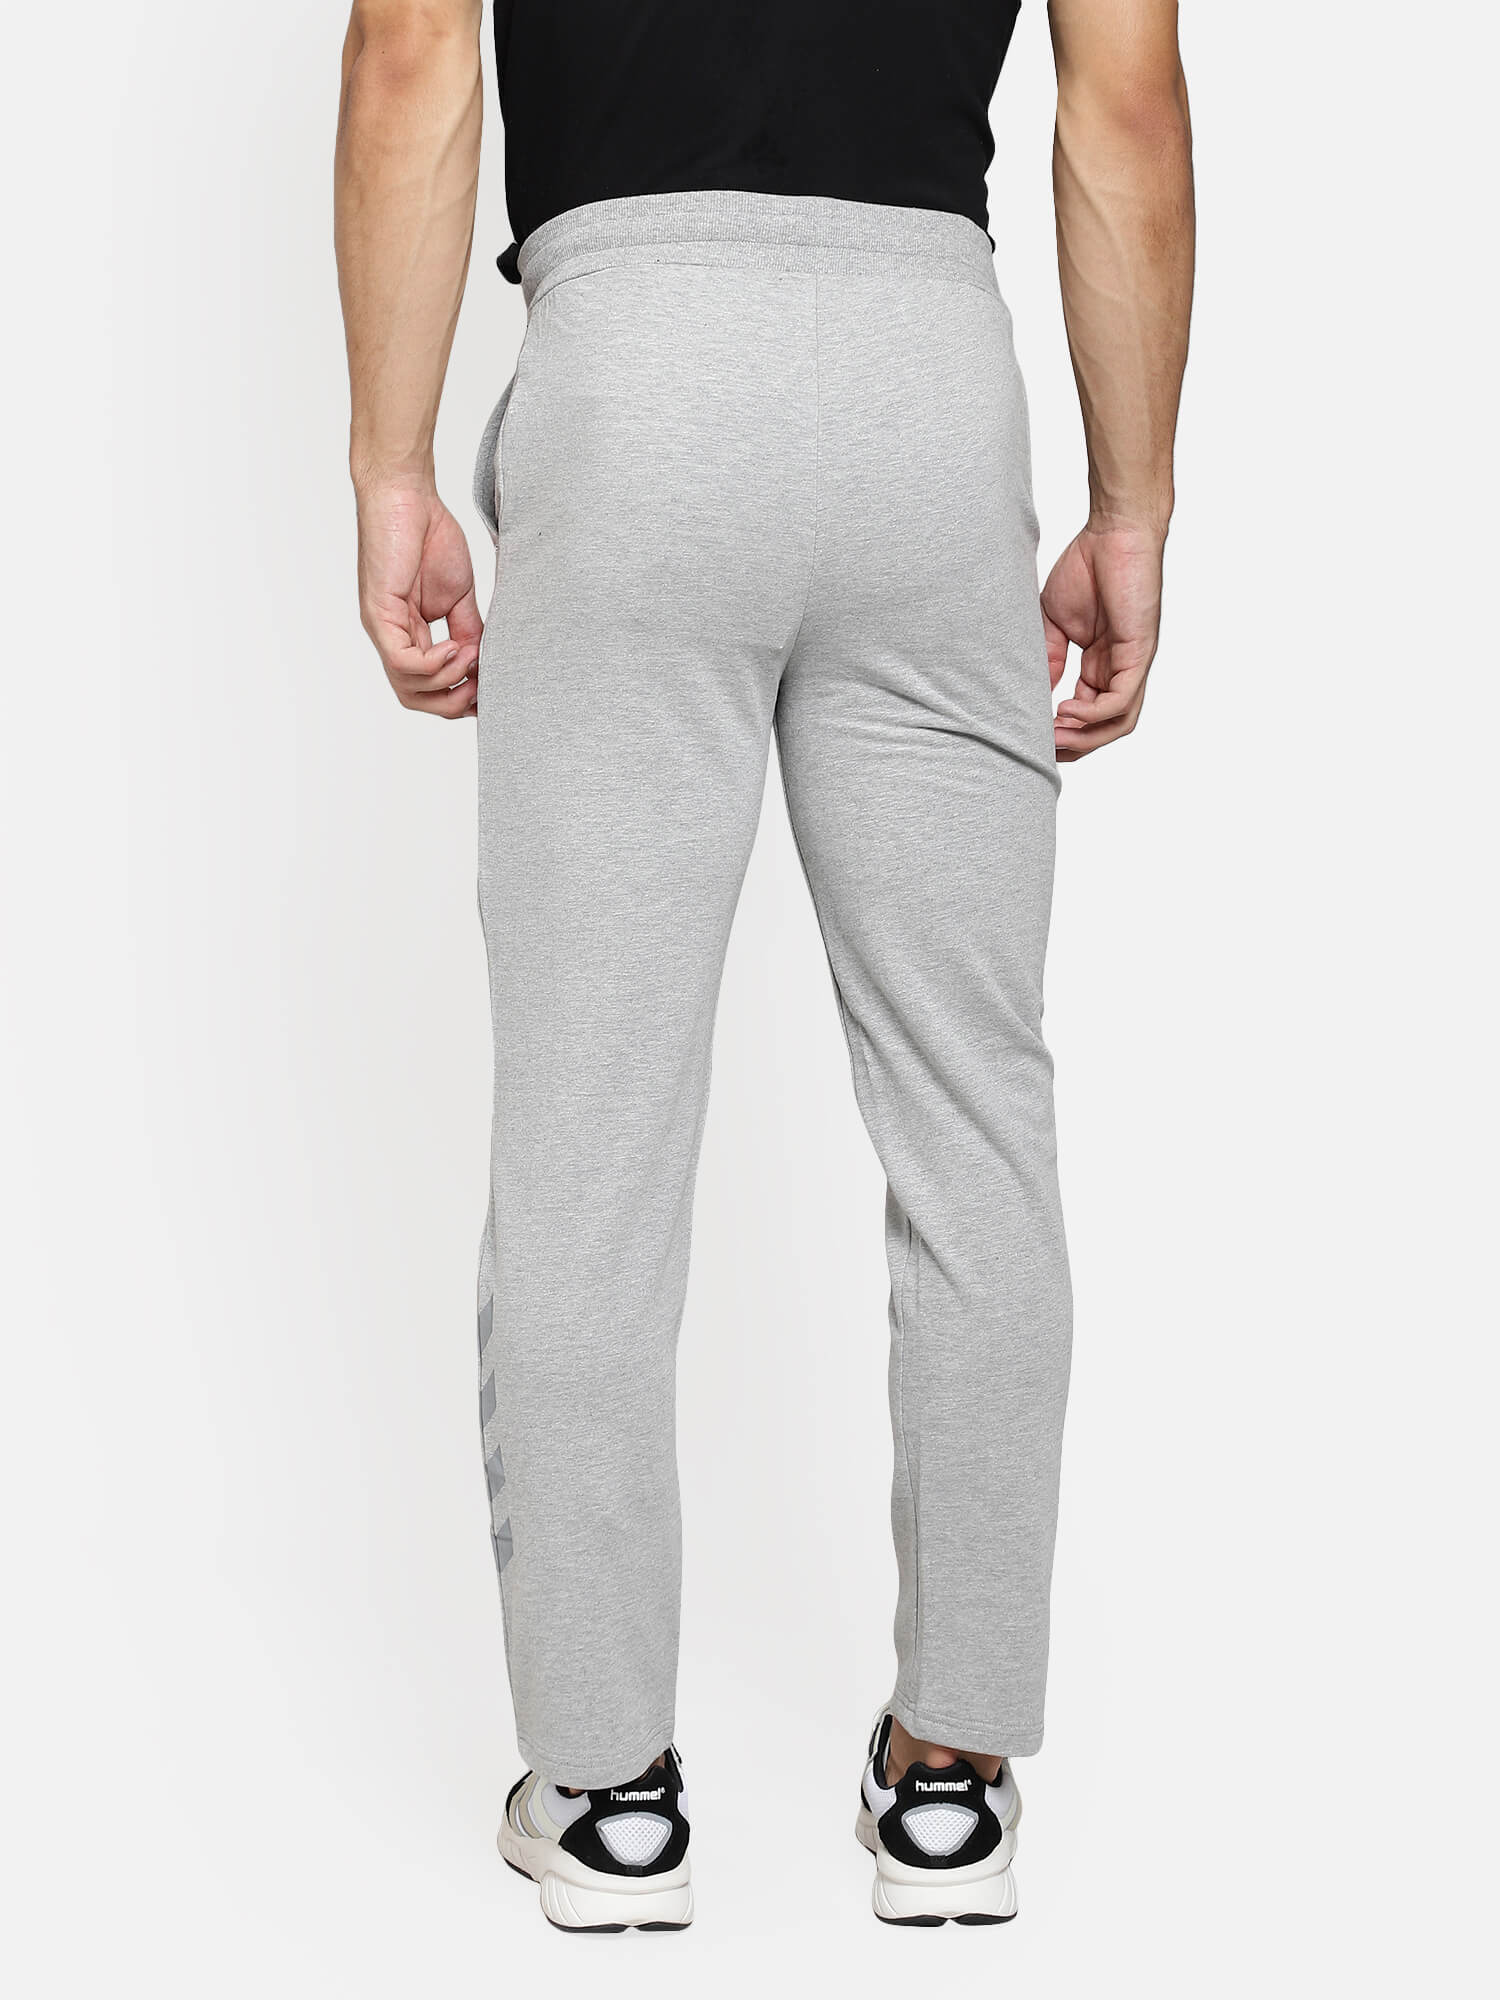 Alex Grey Pants for Men